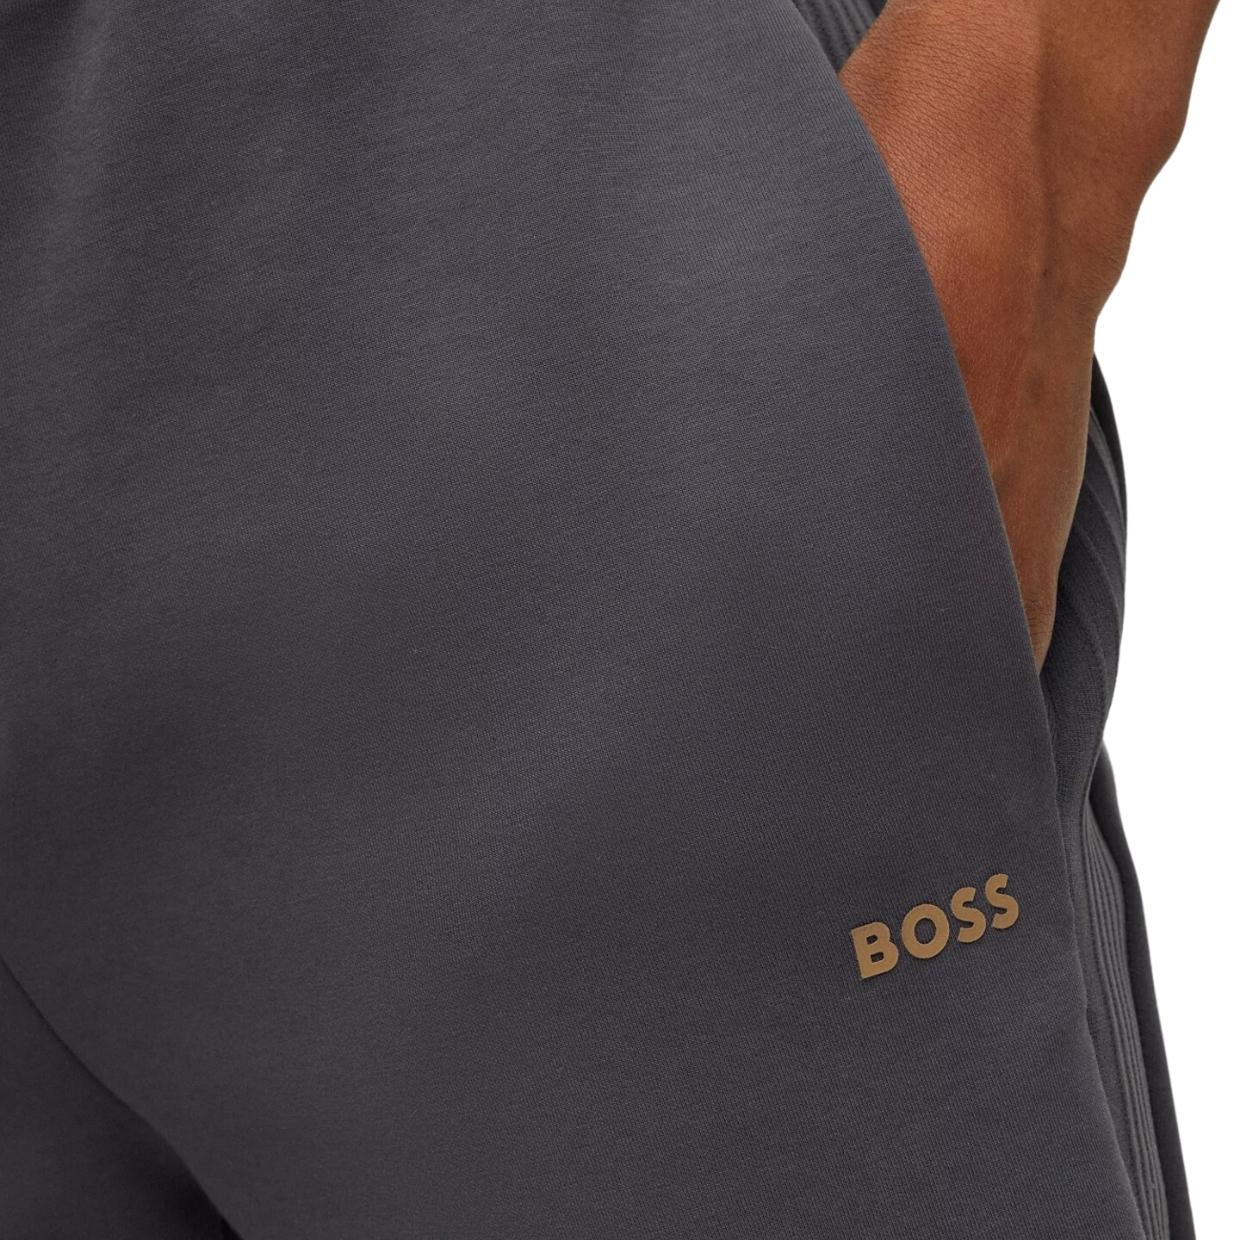 BOSS Headlo Logo Tape Dark Grey Sweat Shorts